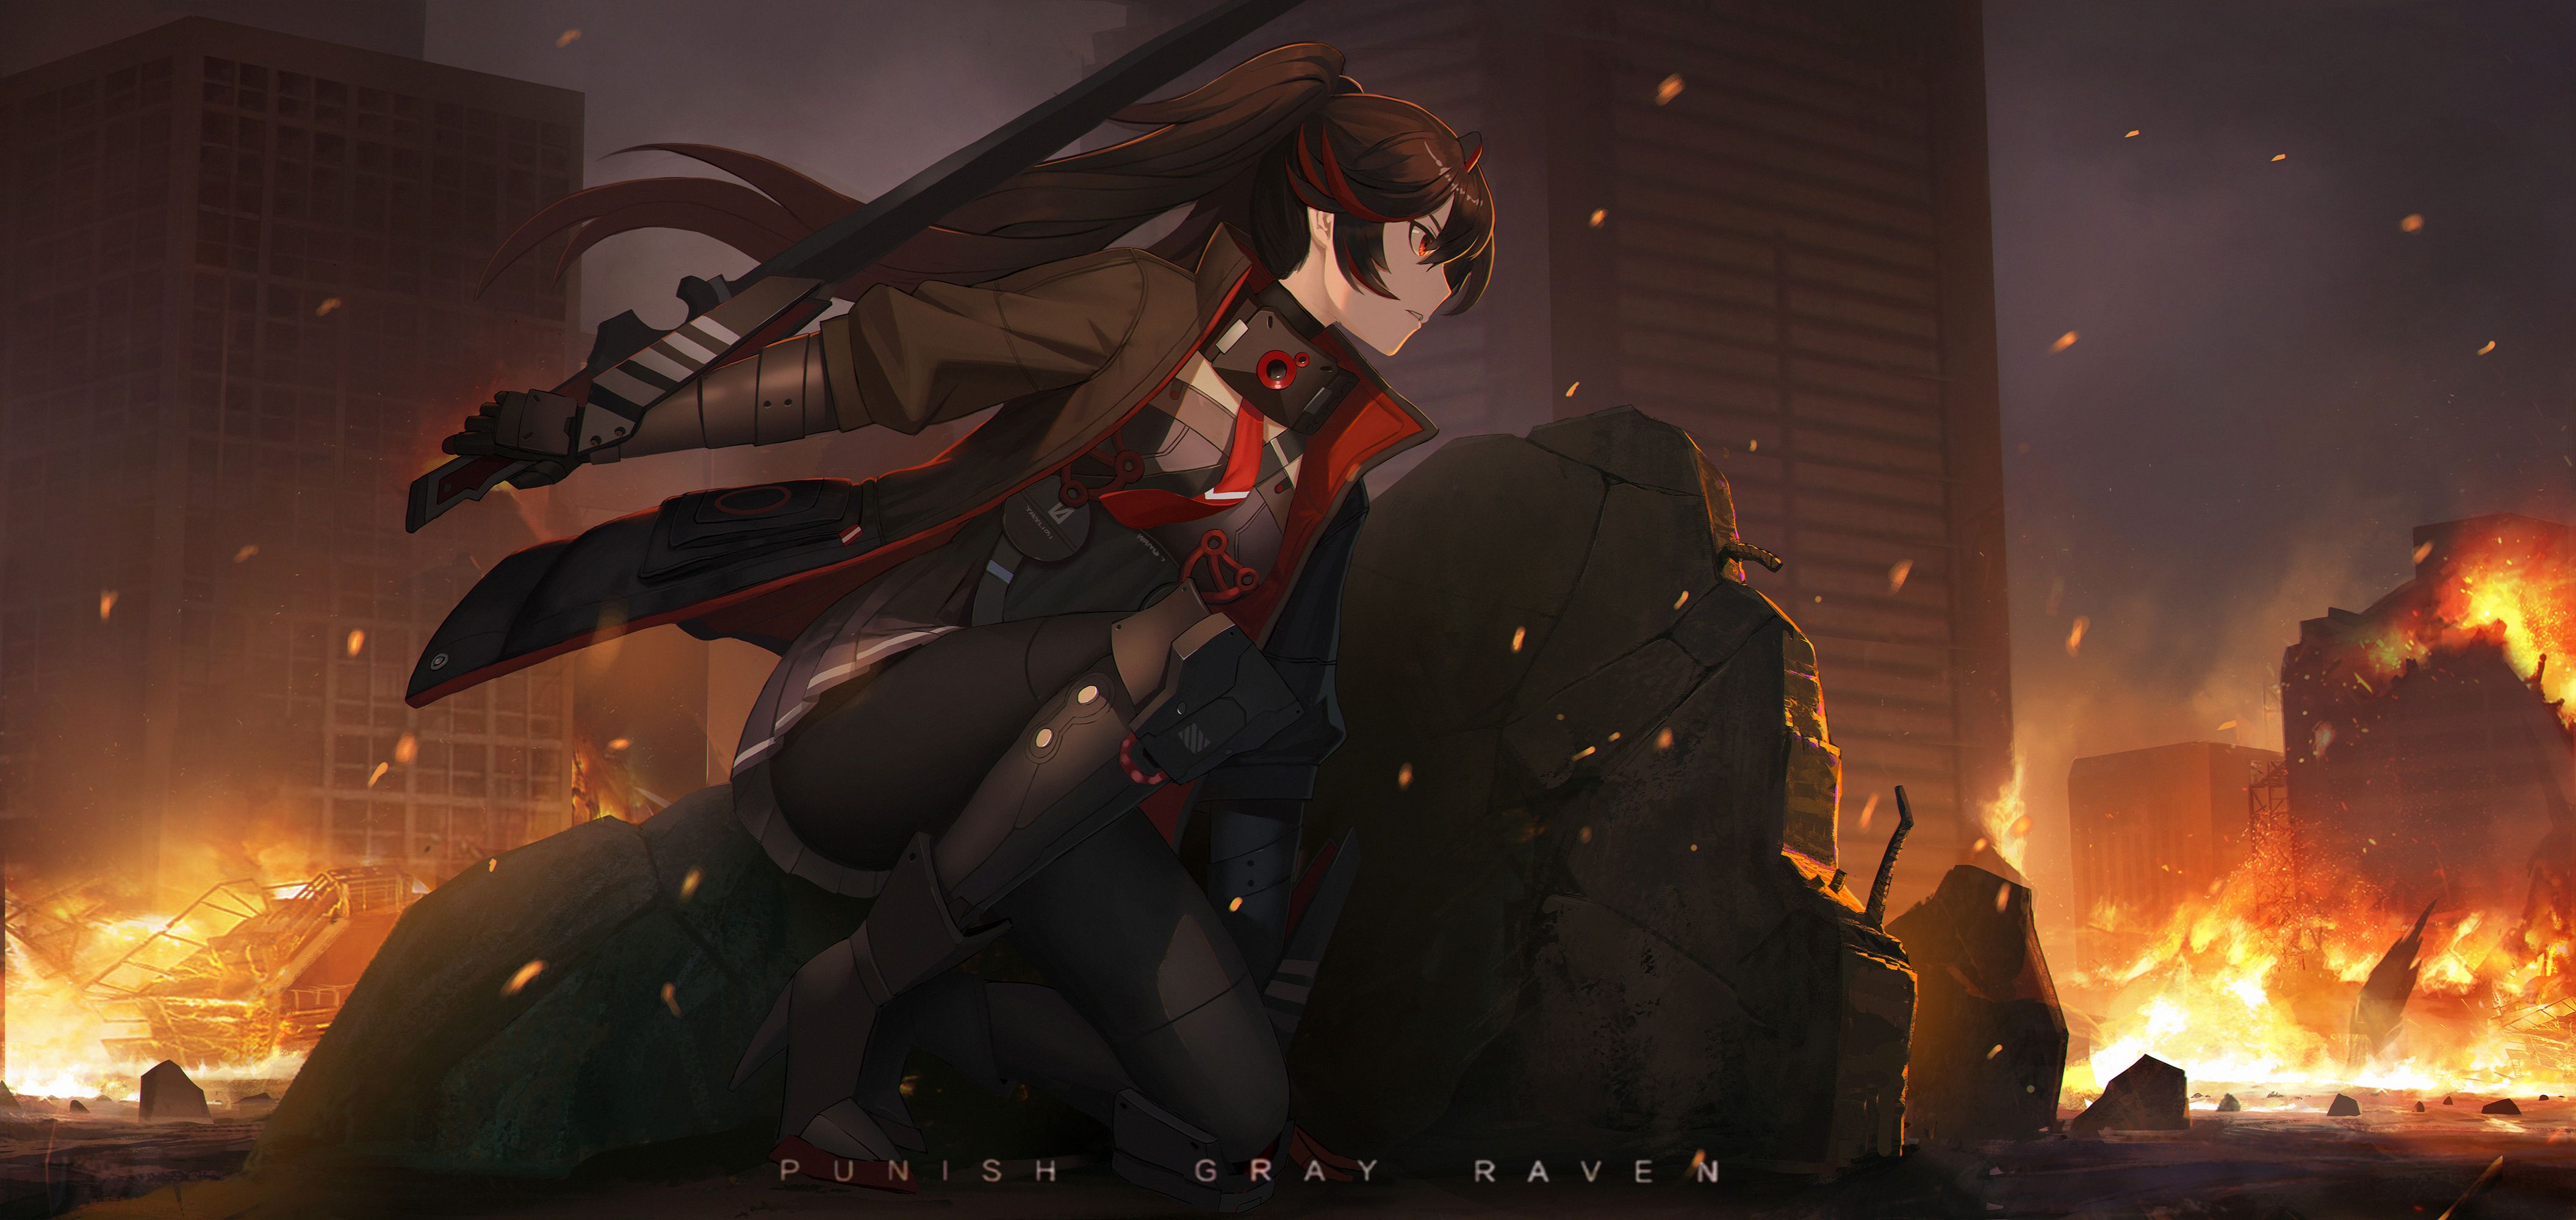 Punishing Gray Raven Anime Girls Girl With Weapon Wallpaper:4222x2000